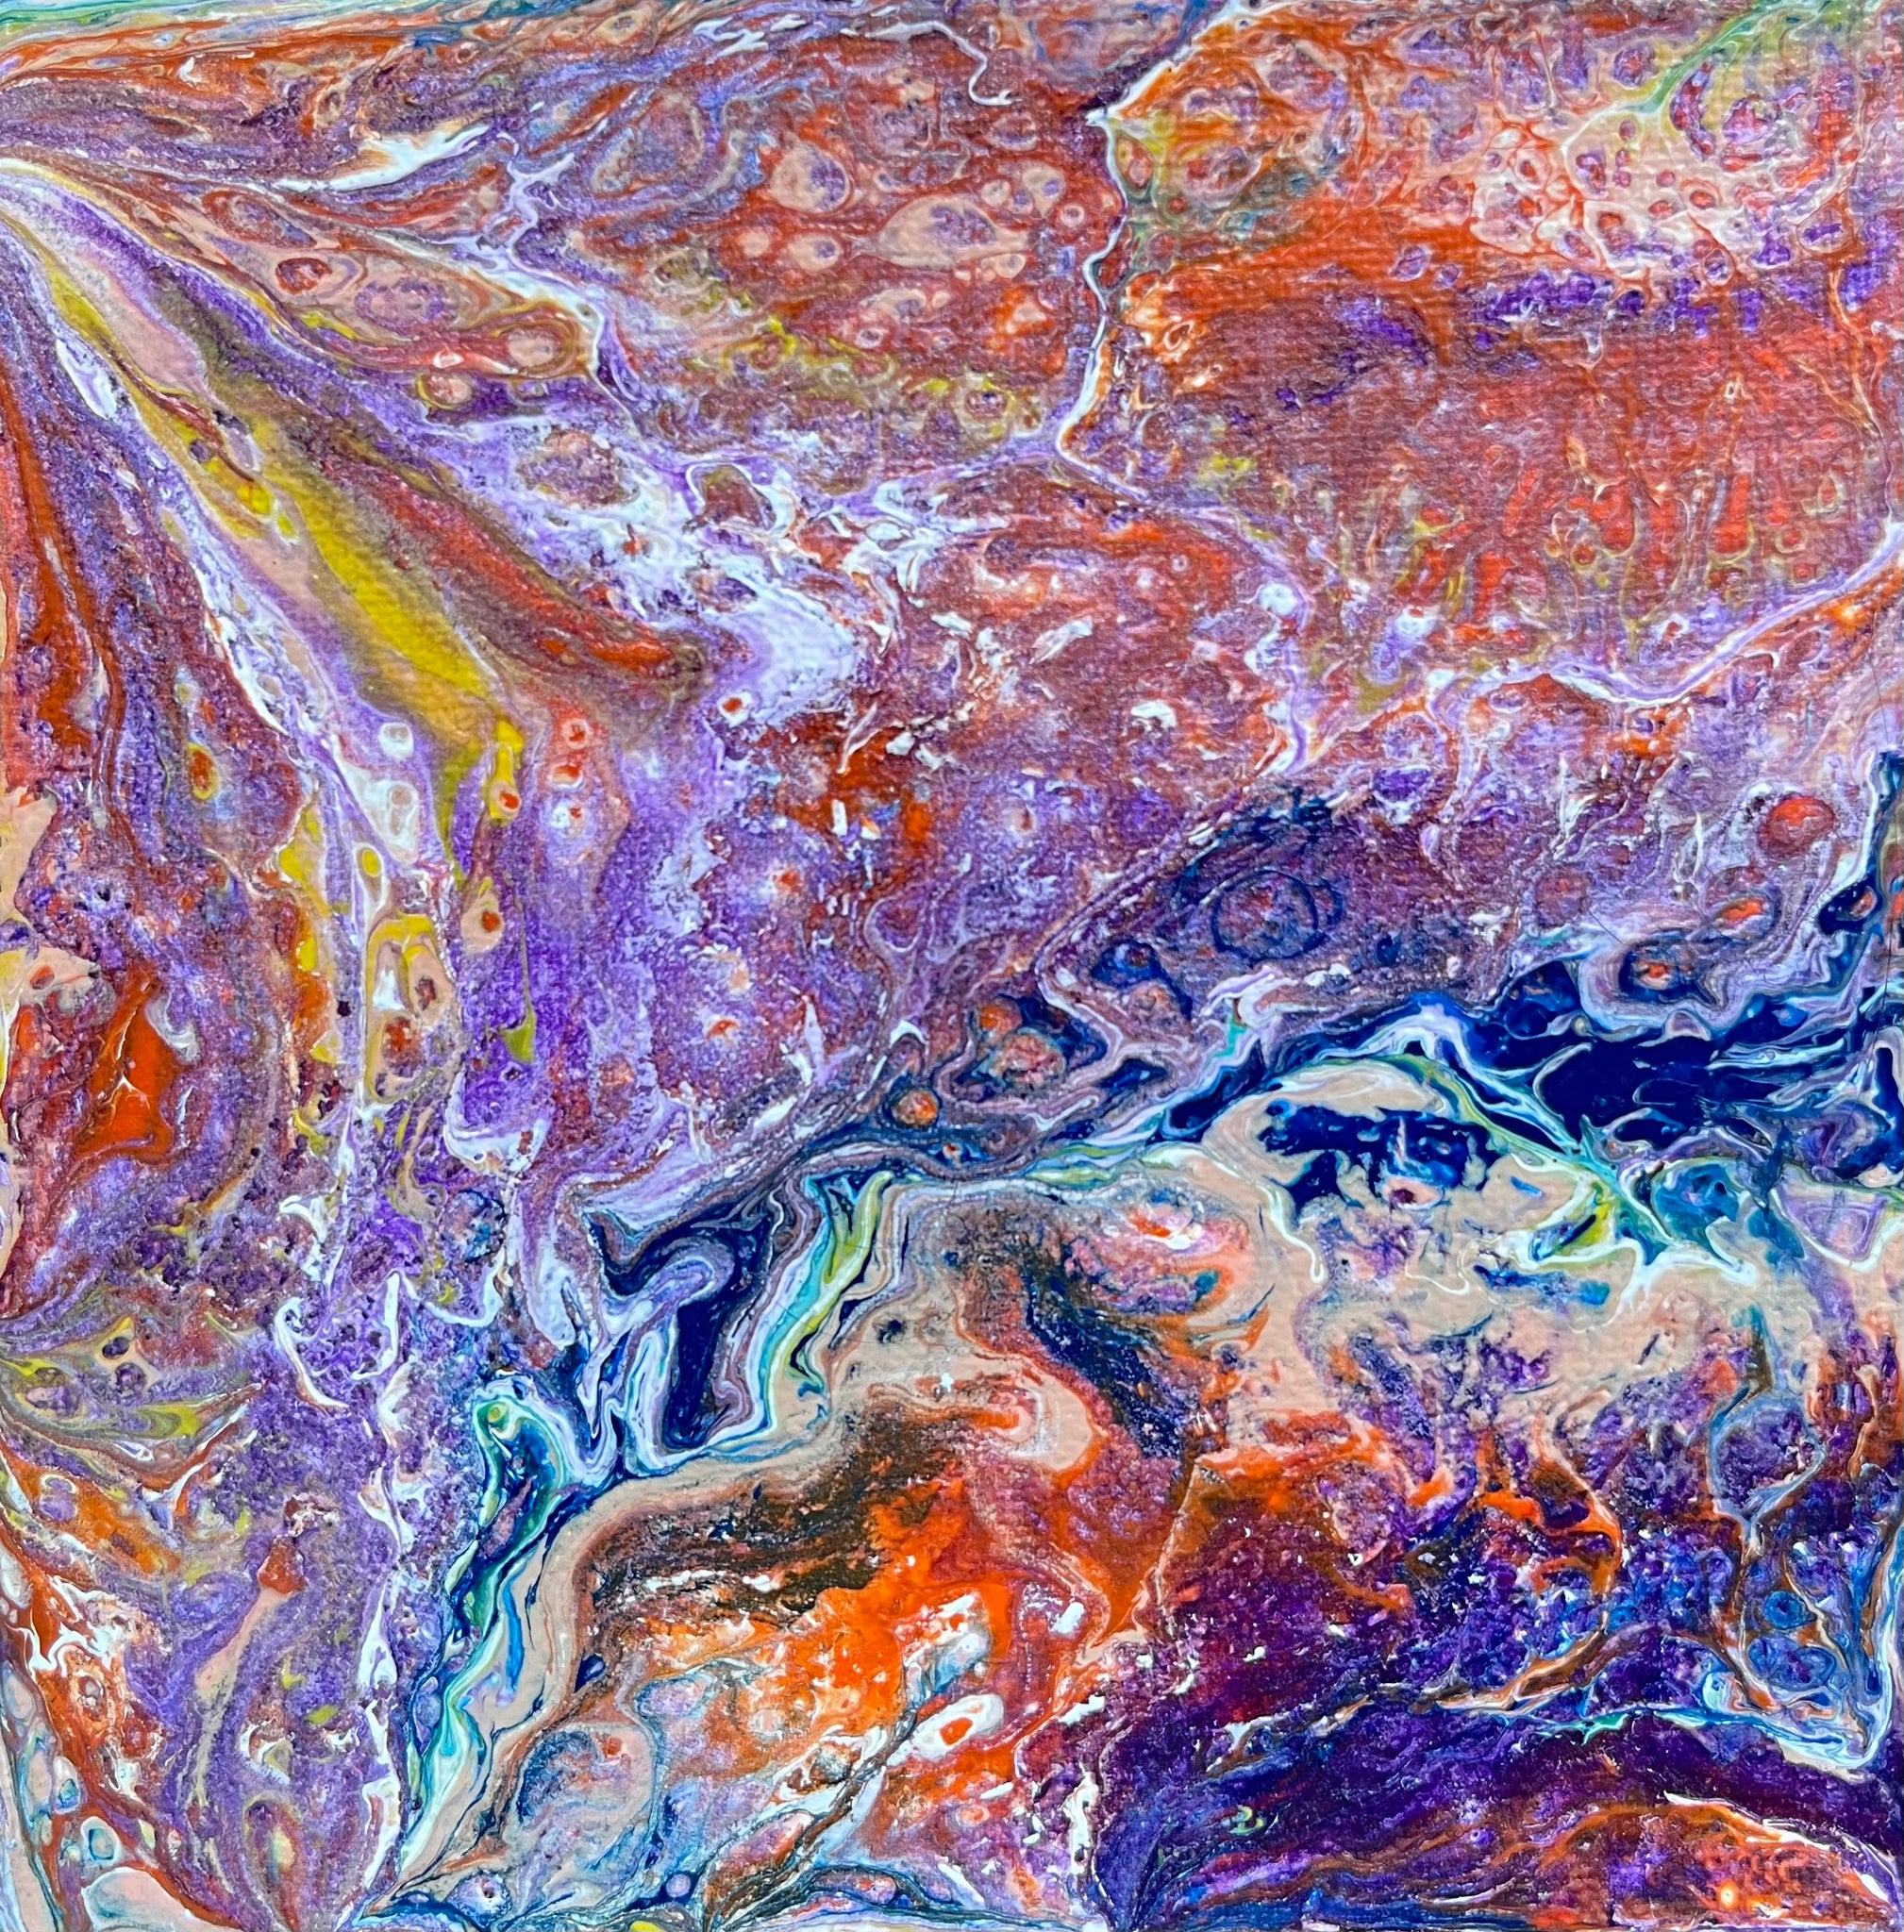 Mini Abstract Art Original Acrylic painting, 6" x 6" in Orange, Purple and Blue